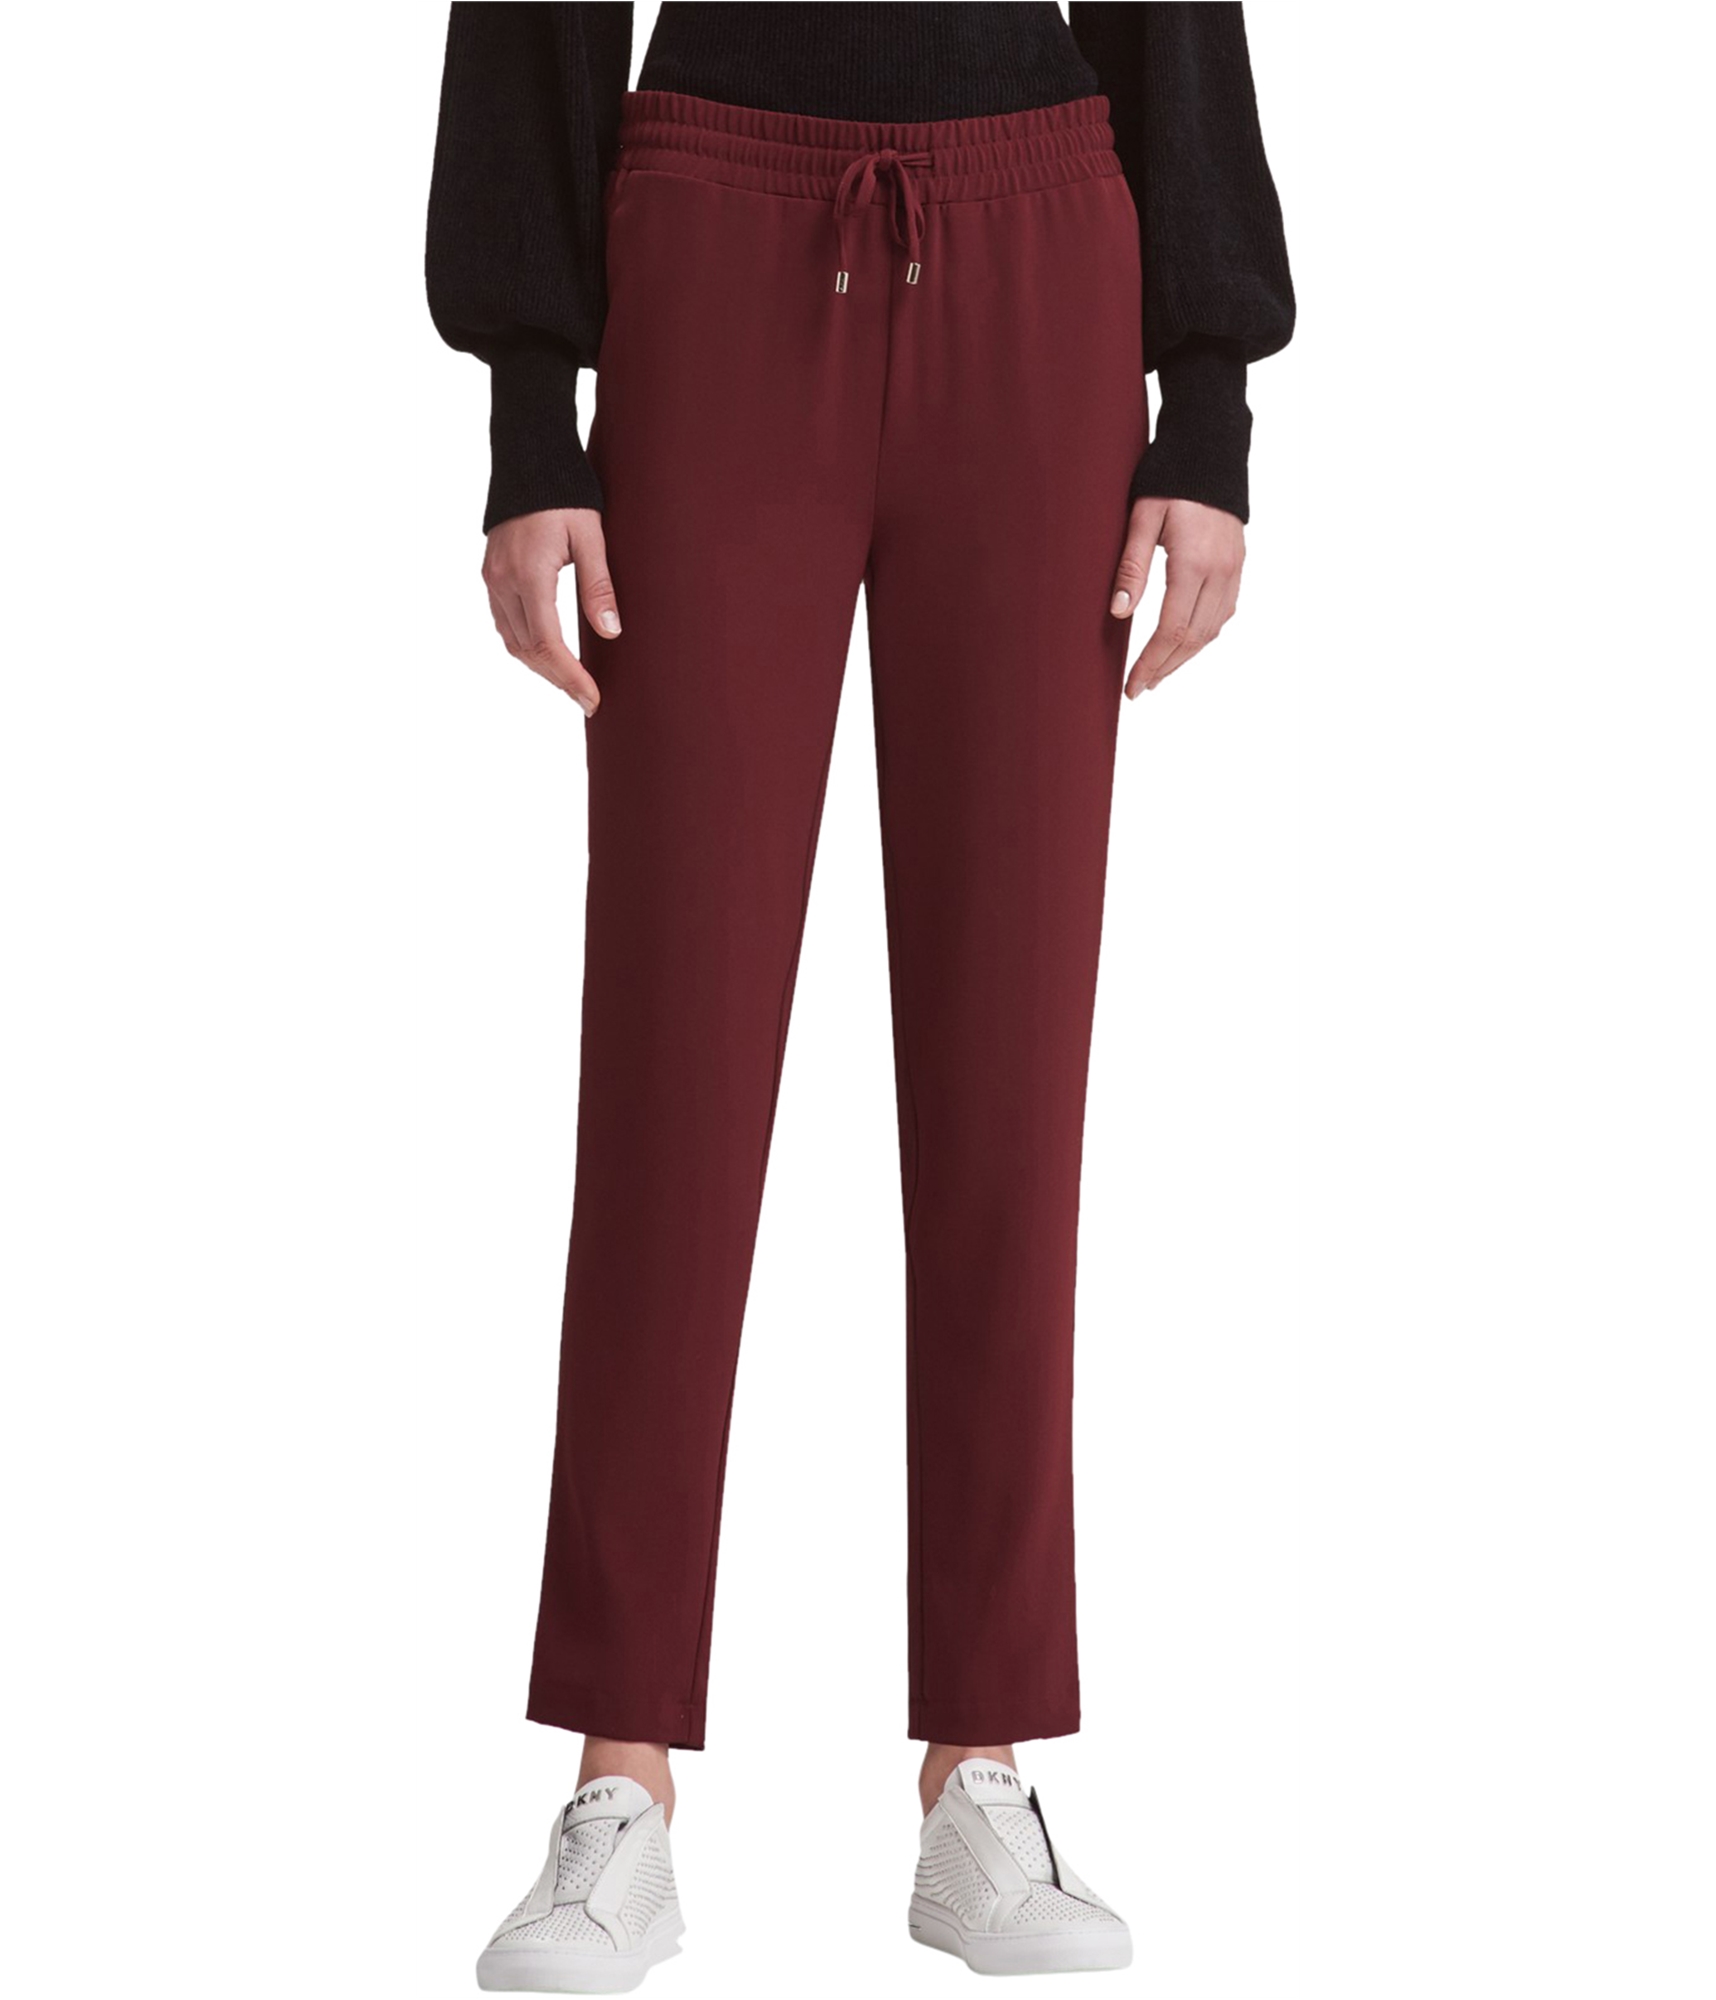 DKNY Womens Drawstring Casual Lounge Pants, Red, Small 802892374081 | eBay